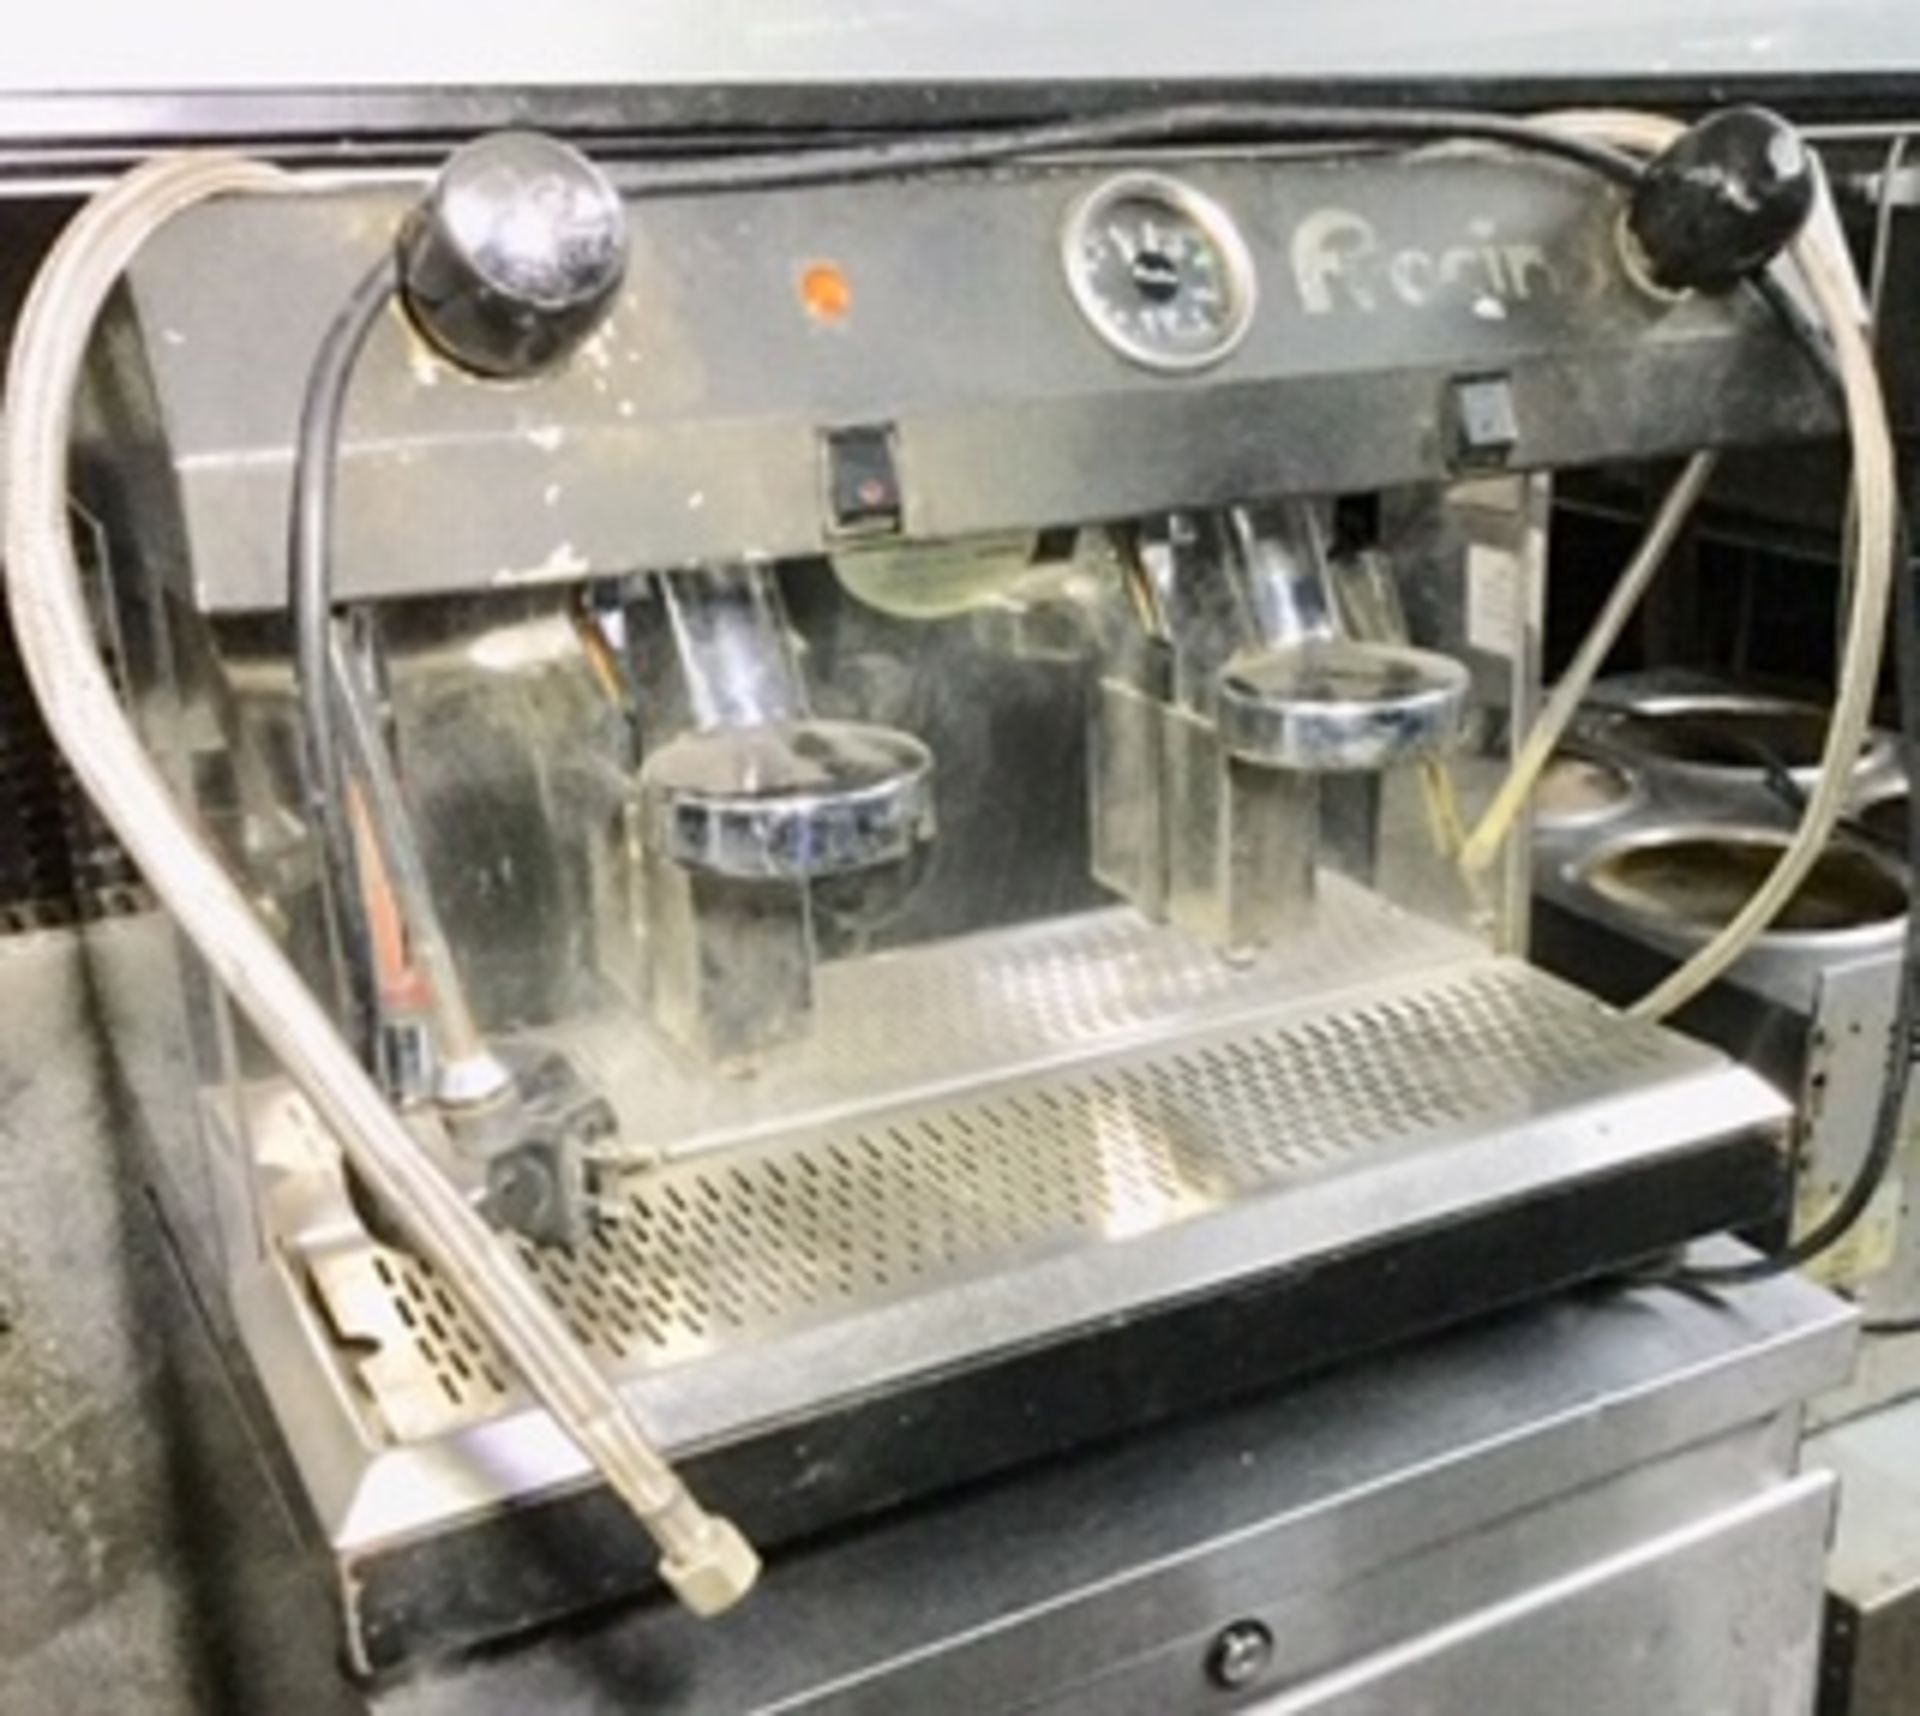 Fracino Two Group Espresso / Cappuccino Coffee Machine – NO VAT